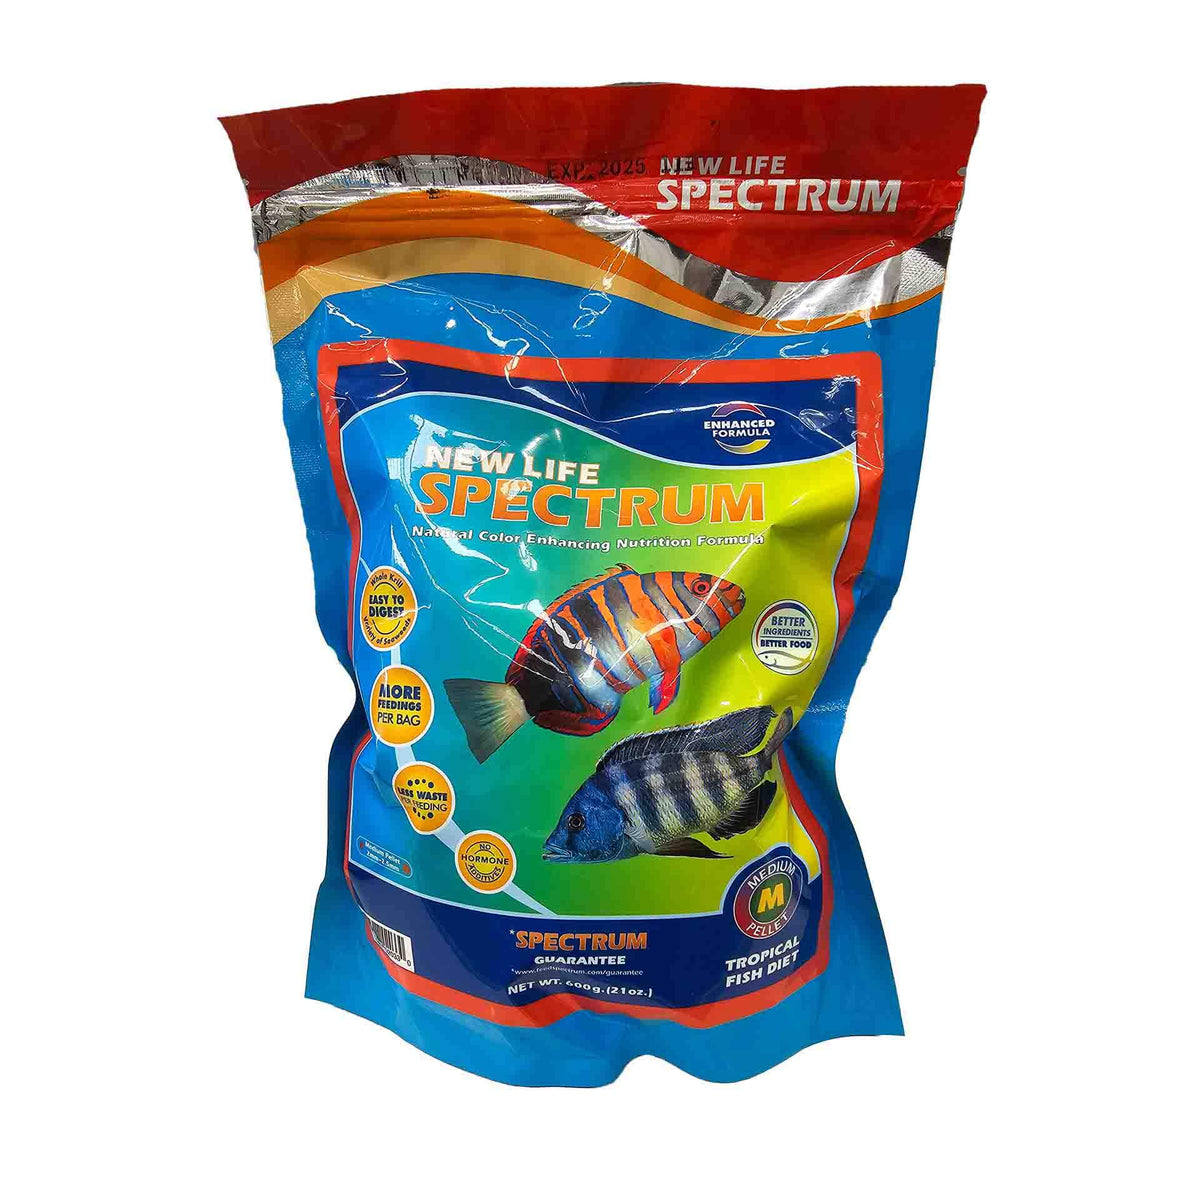 New Life Spectrum Medium Tropical Fish Diet 600g - Sinking Pellet 2-2.5mm